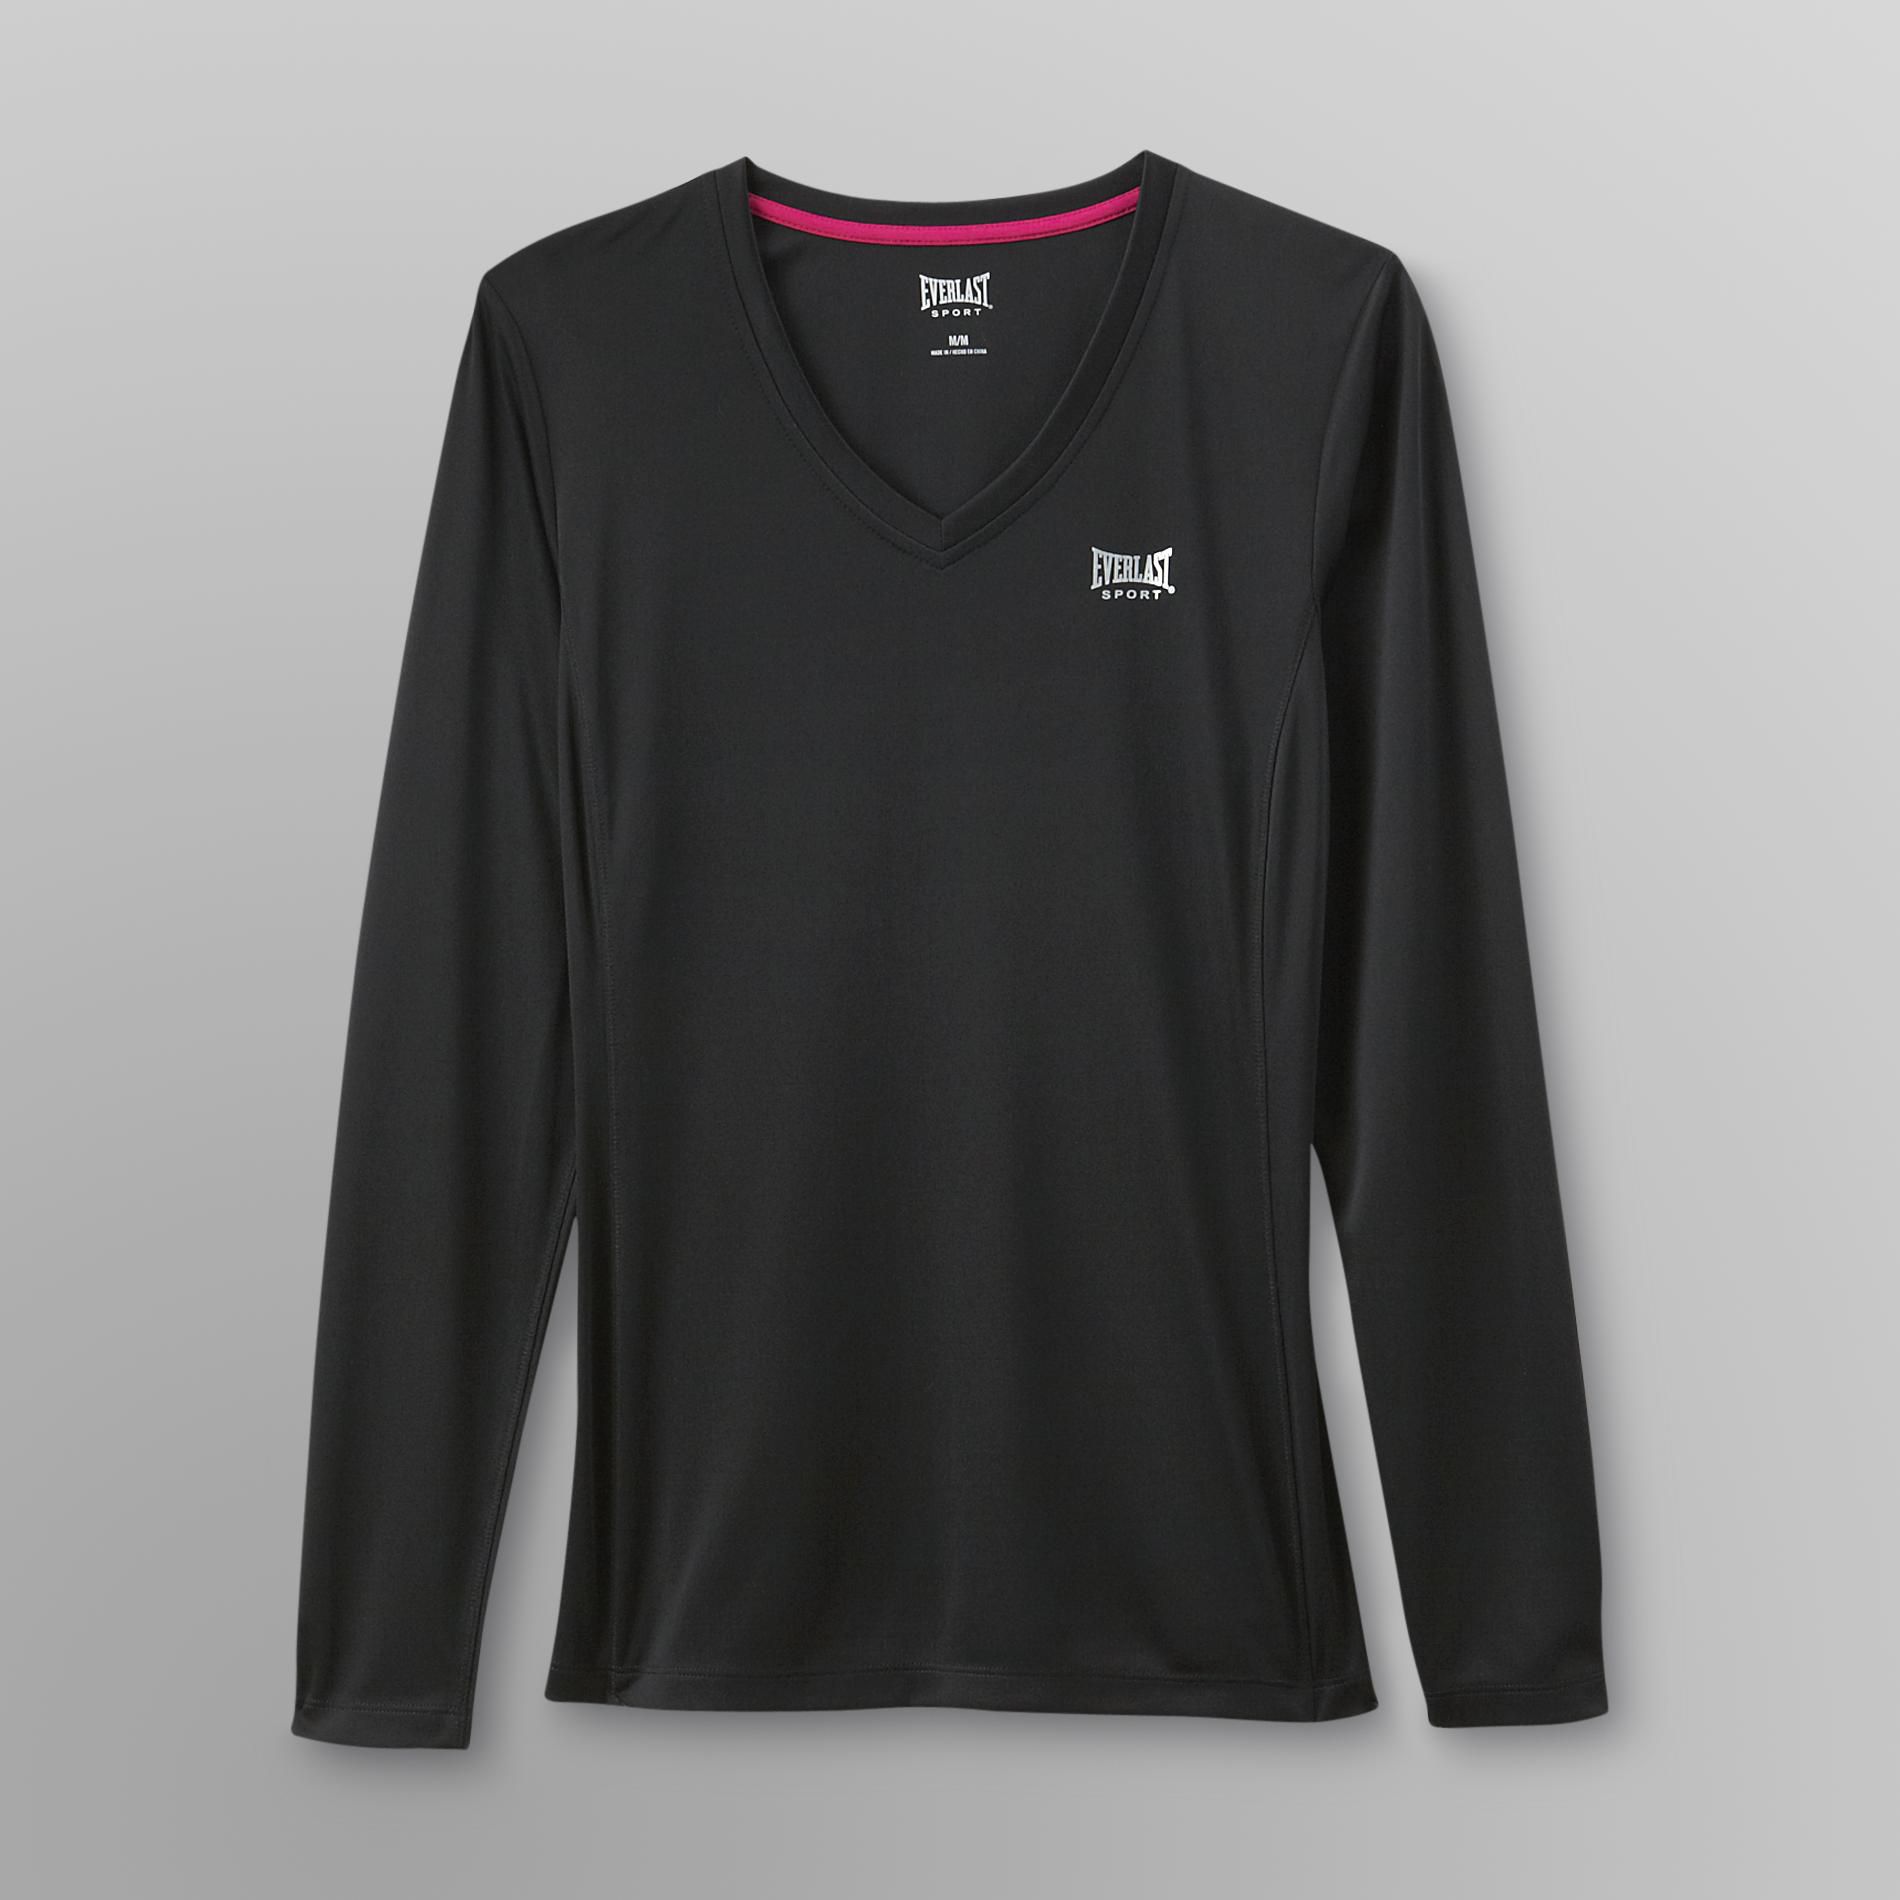 Everlast&reg; Sport Women's Long Sleeve Athletic Shirt